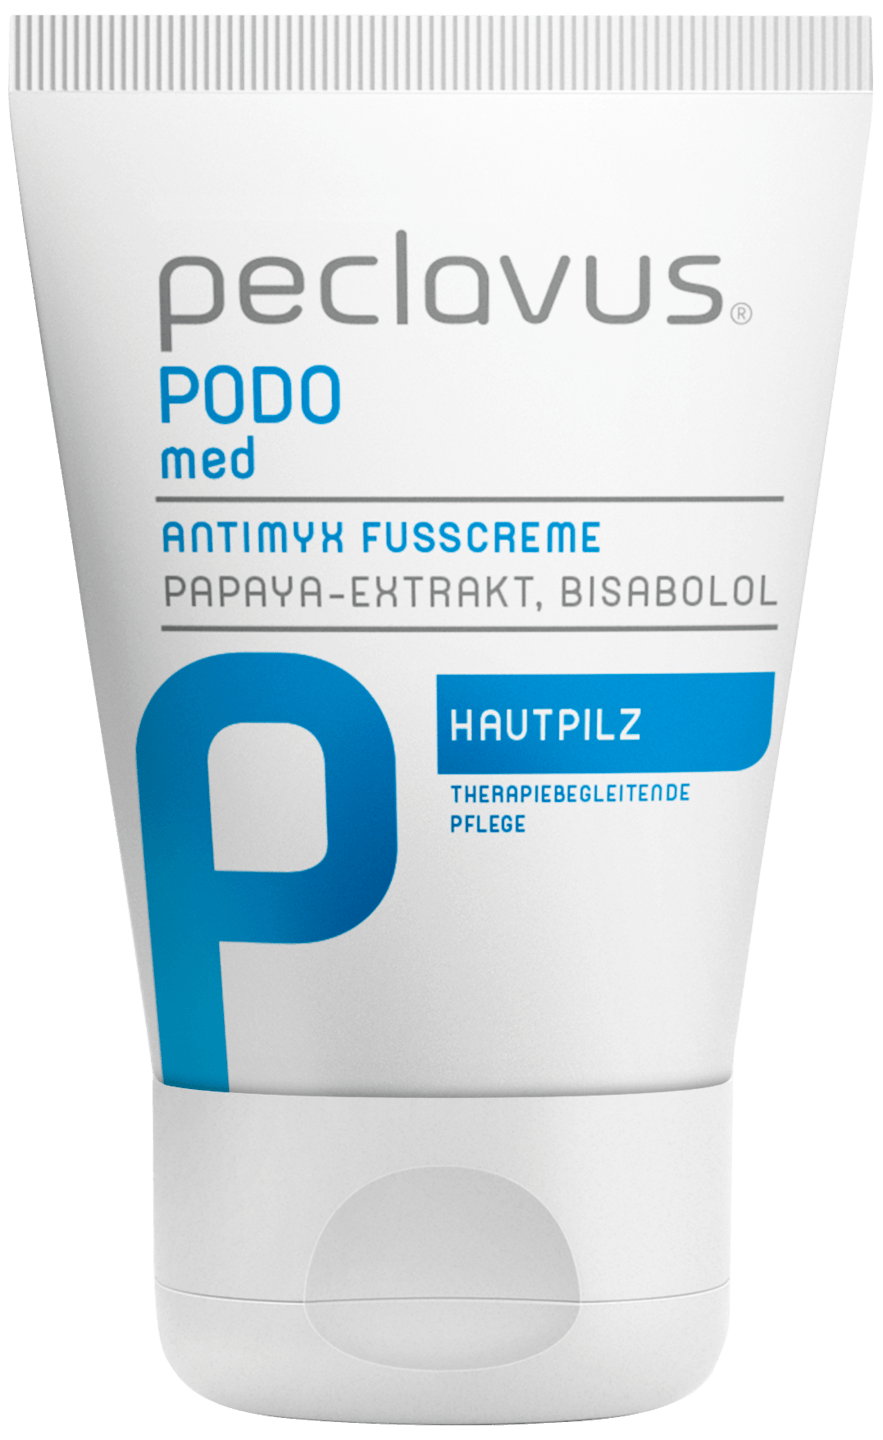 peclavus - AntiMYX Fußcreme, 30 ml